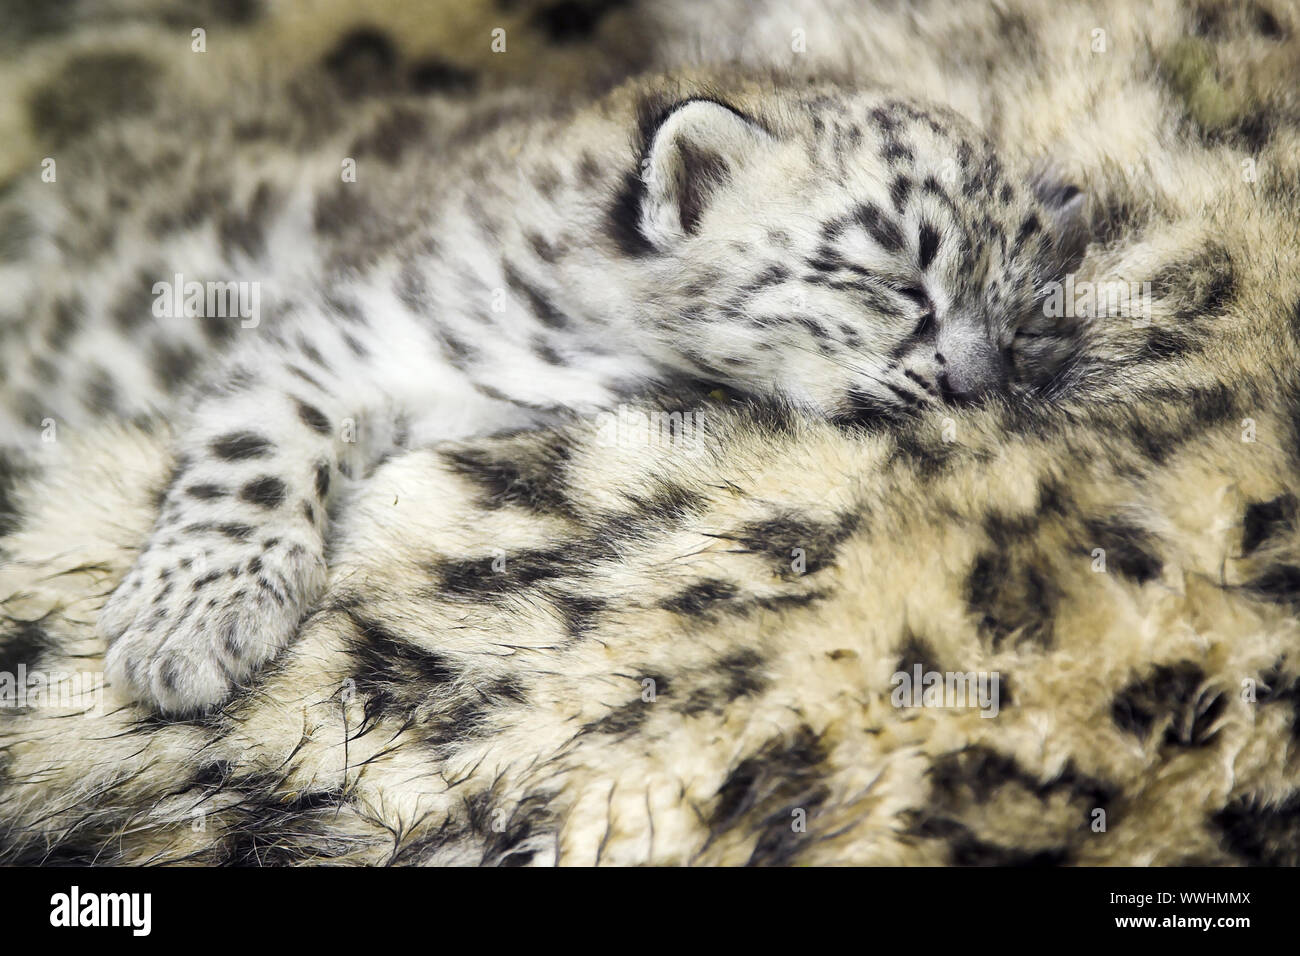 Schneeleopard, Irbis, Jungtier schlafend, cub, sleeping, Unica unica, Panthera unica, Snow Leopard Stock Photo